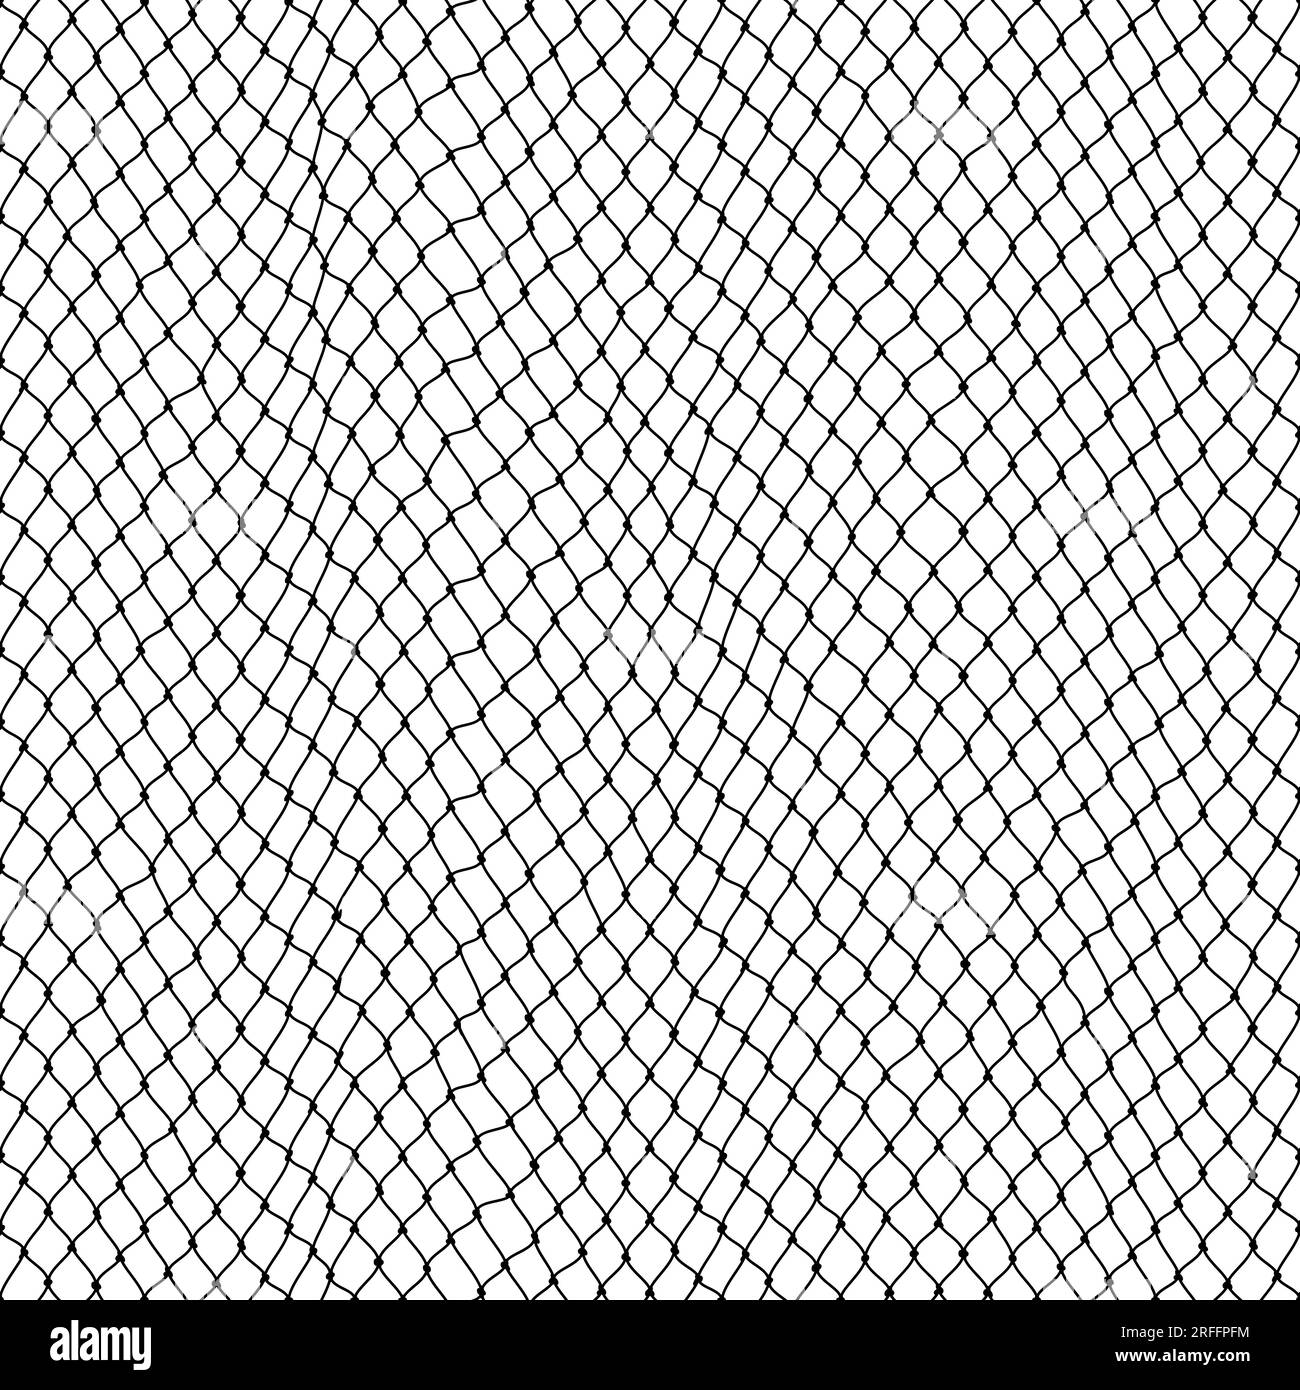 https://c8.alamy.com/comp/2RFFPFM/fishnet-pattern-fish-net-background-soccer-goal-mesh-vector-fishing-football-or-tennis-sport-seamless-ropes-and-knots-pattern-with-black-and-whit-2RFFPFM.jpg